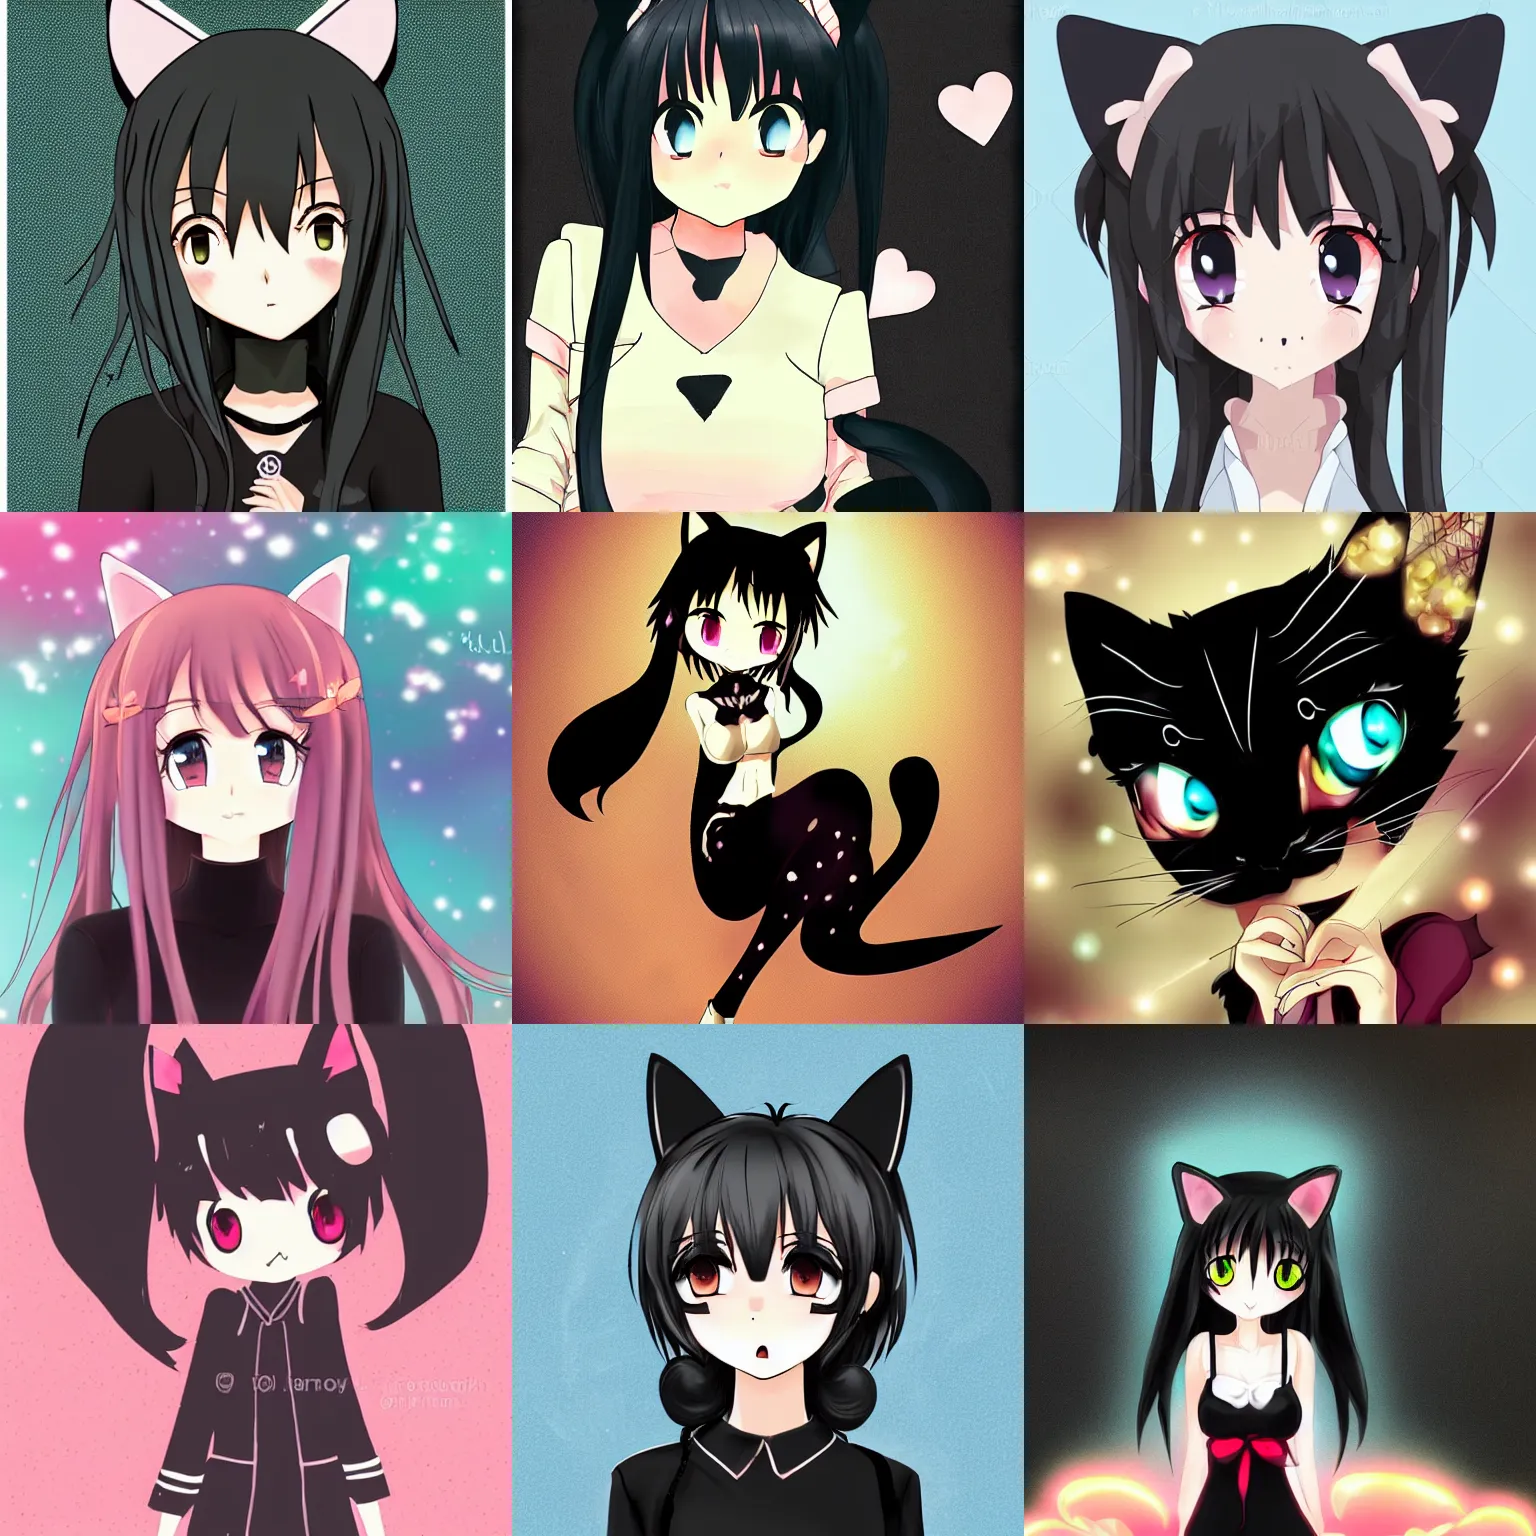 Prompt: cute, female, anime style, a salem black cat girl, beautiful lighting, sharp focus, creative